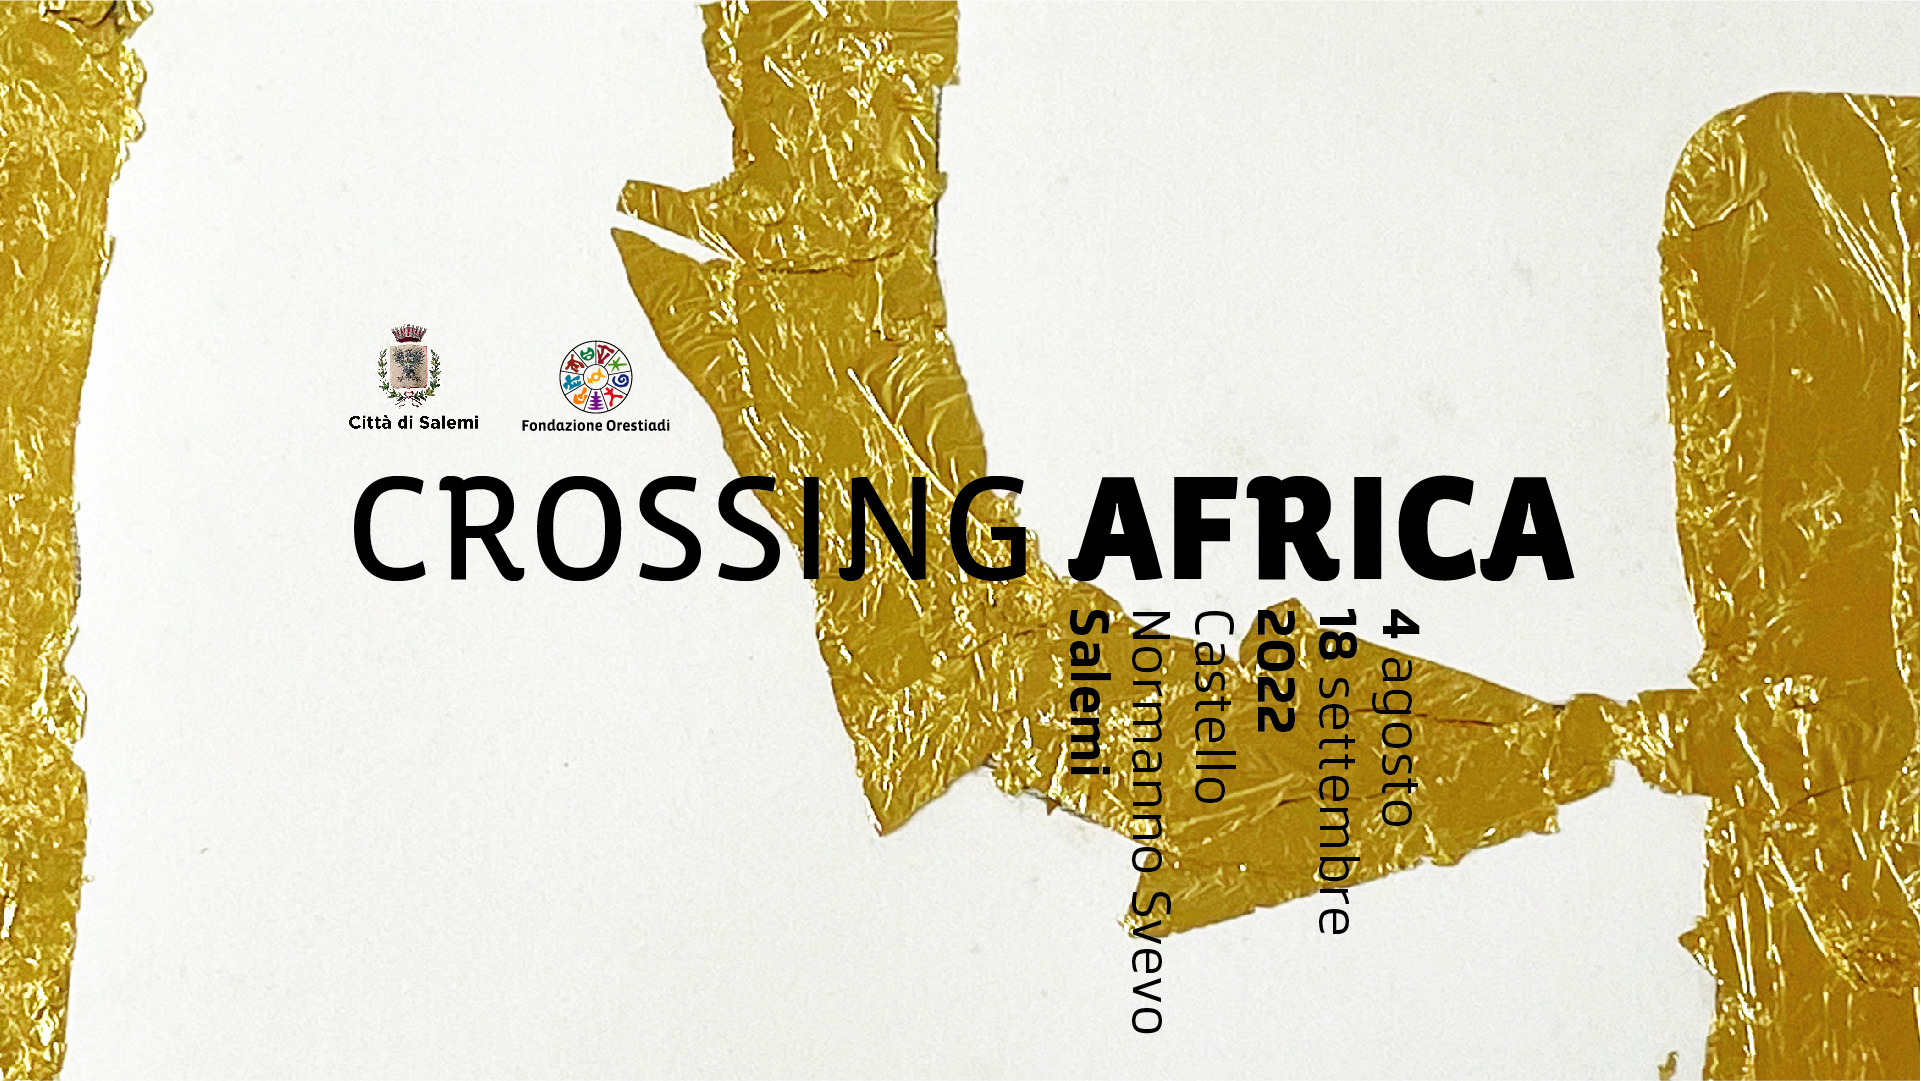 Crossing Africa